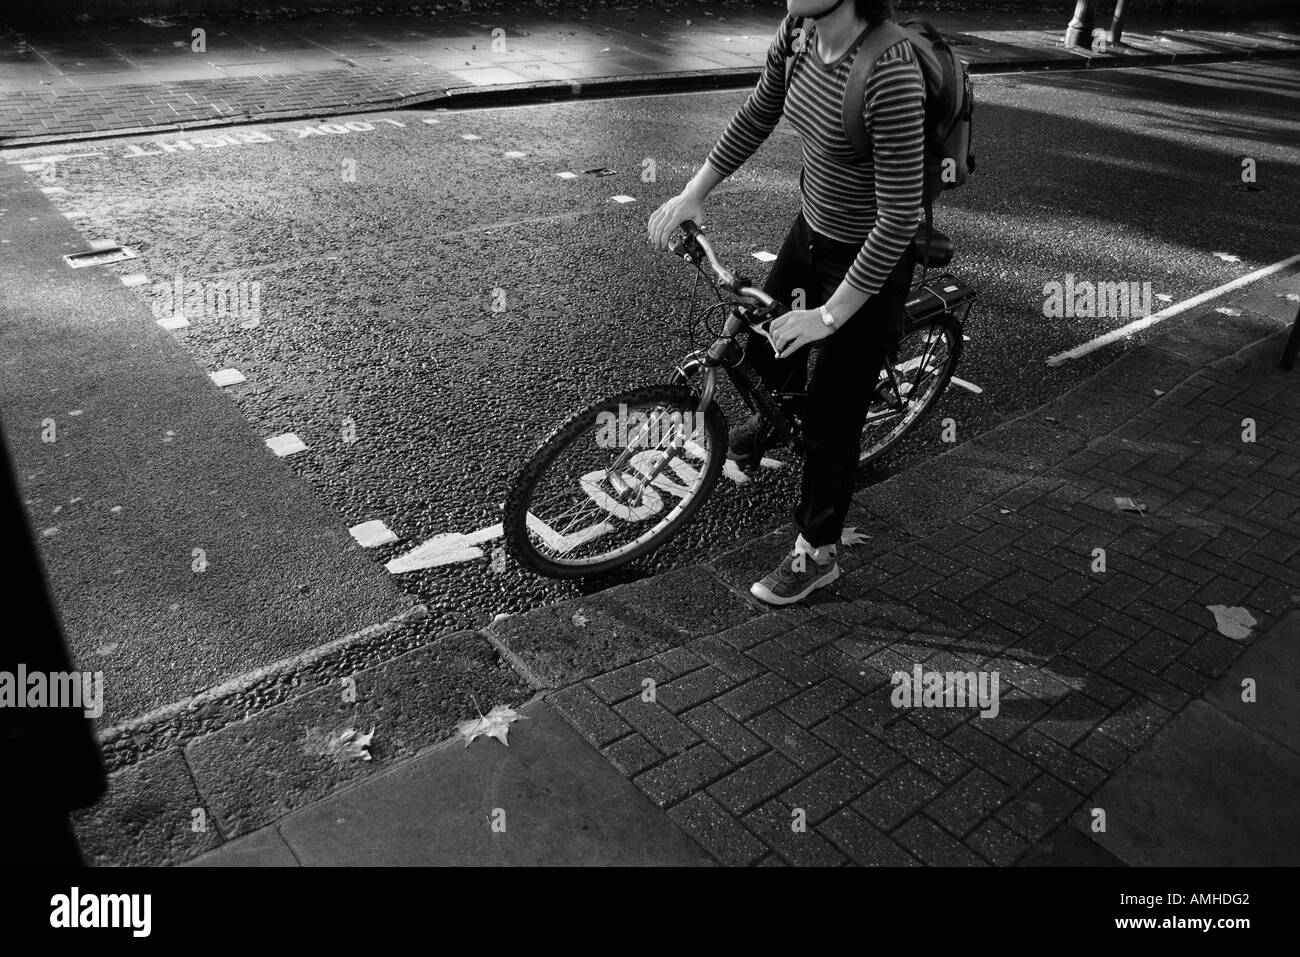 Woman on Street with Bike, London, England Stock Photo